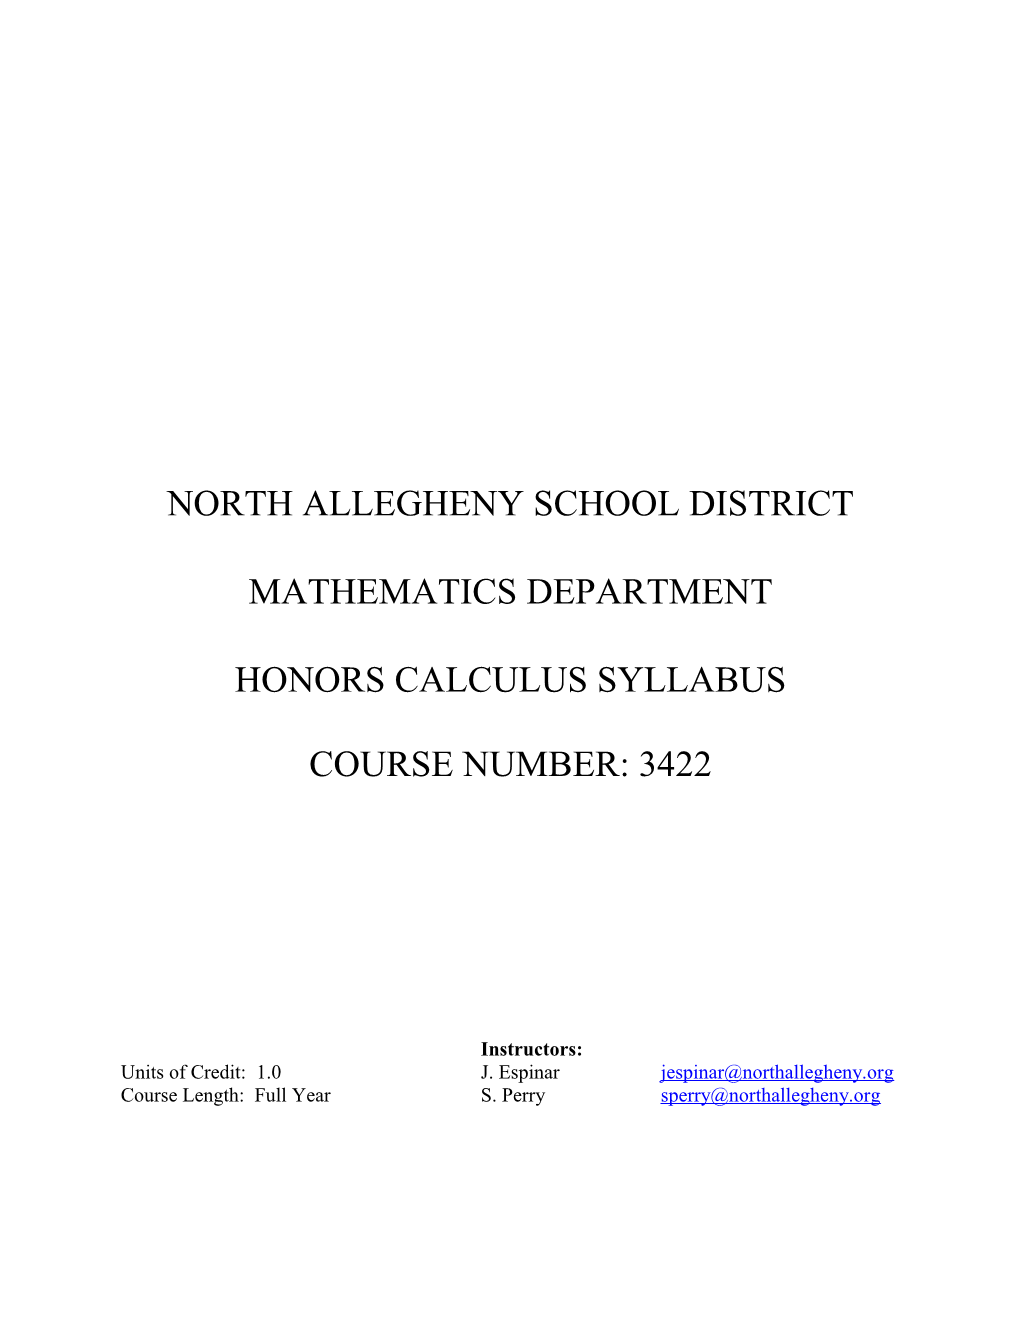 Honors Calculus Syllabus